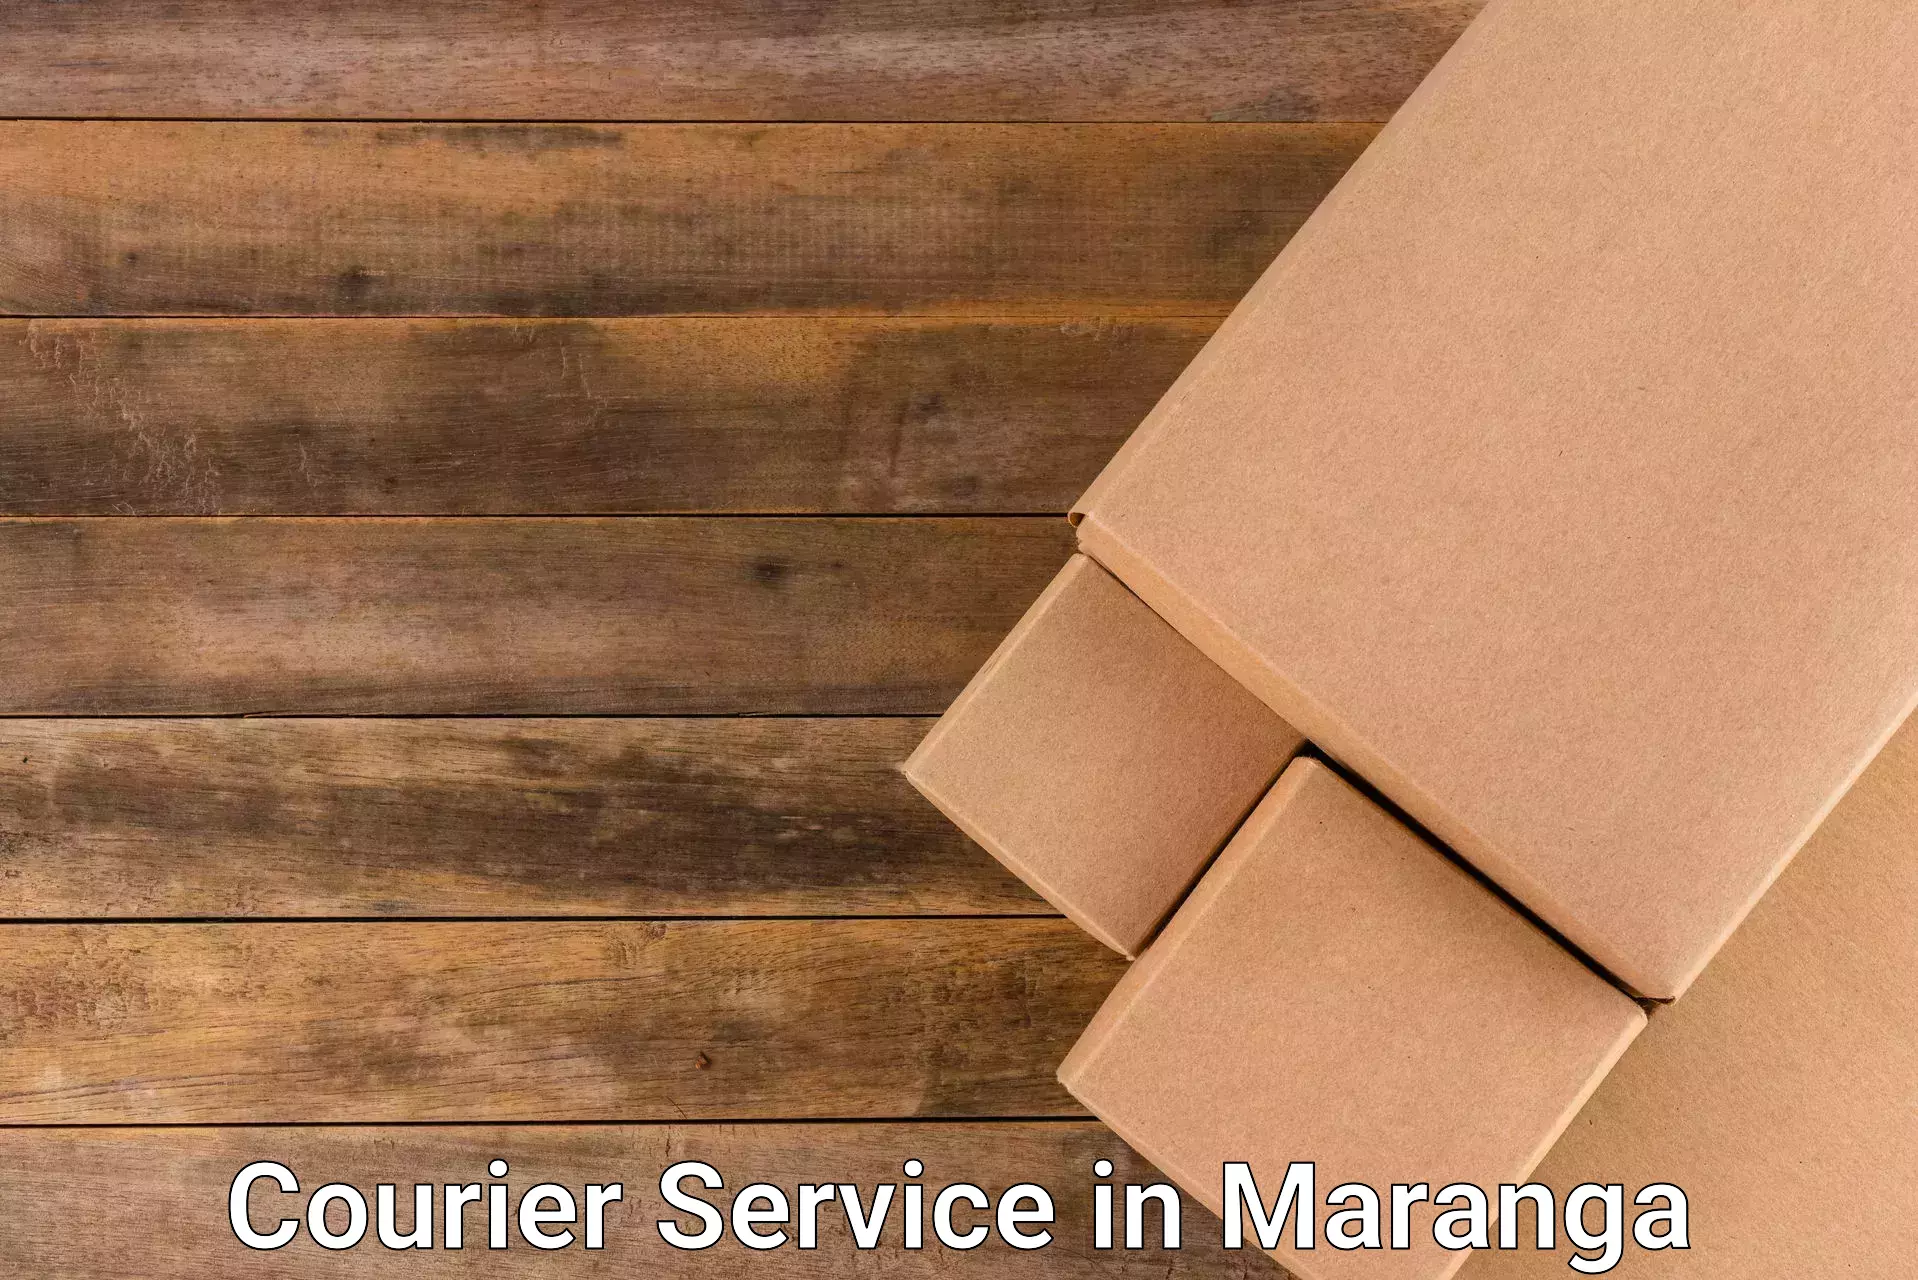 Express logistics in Maranga